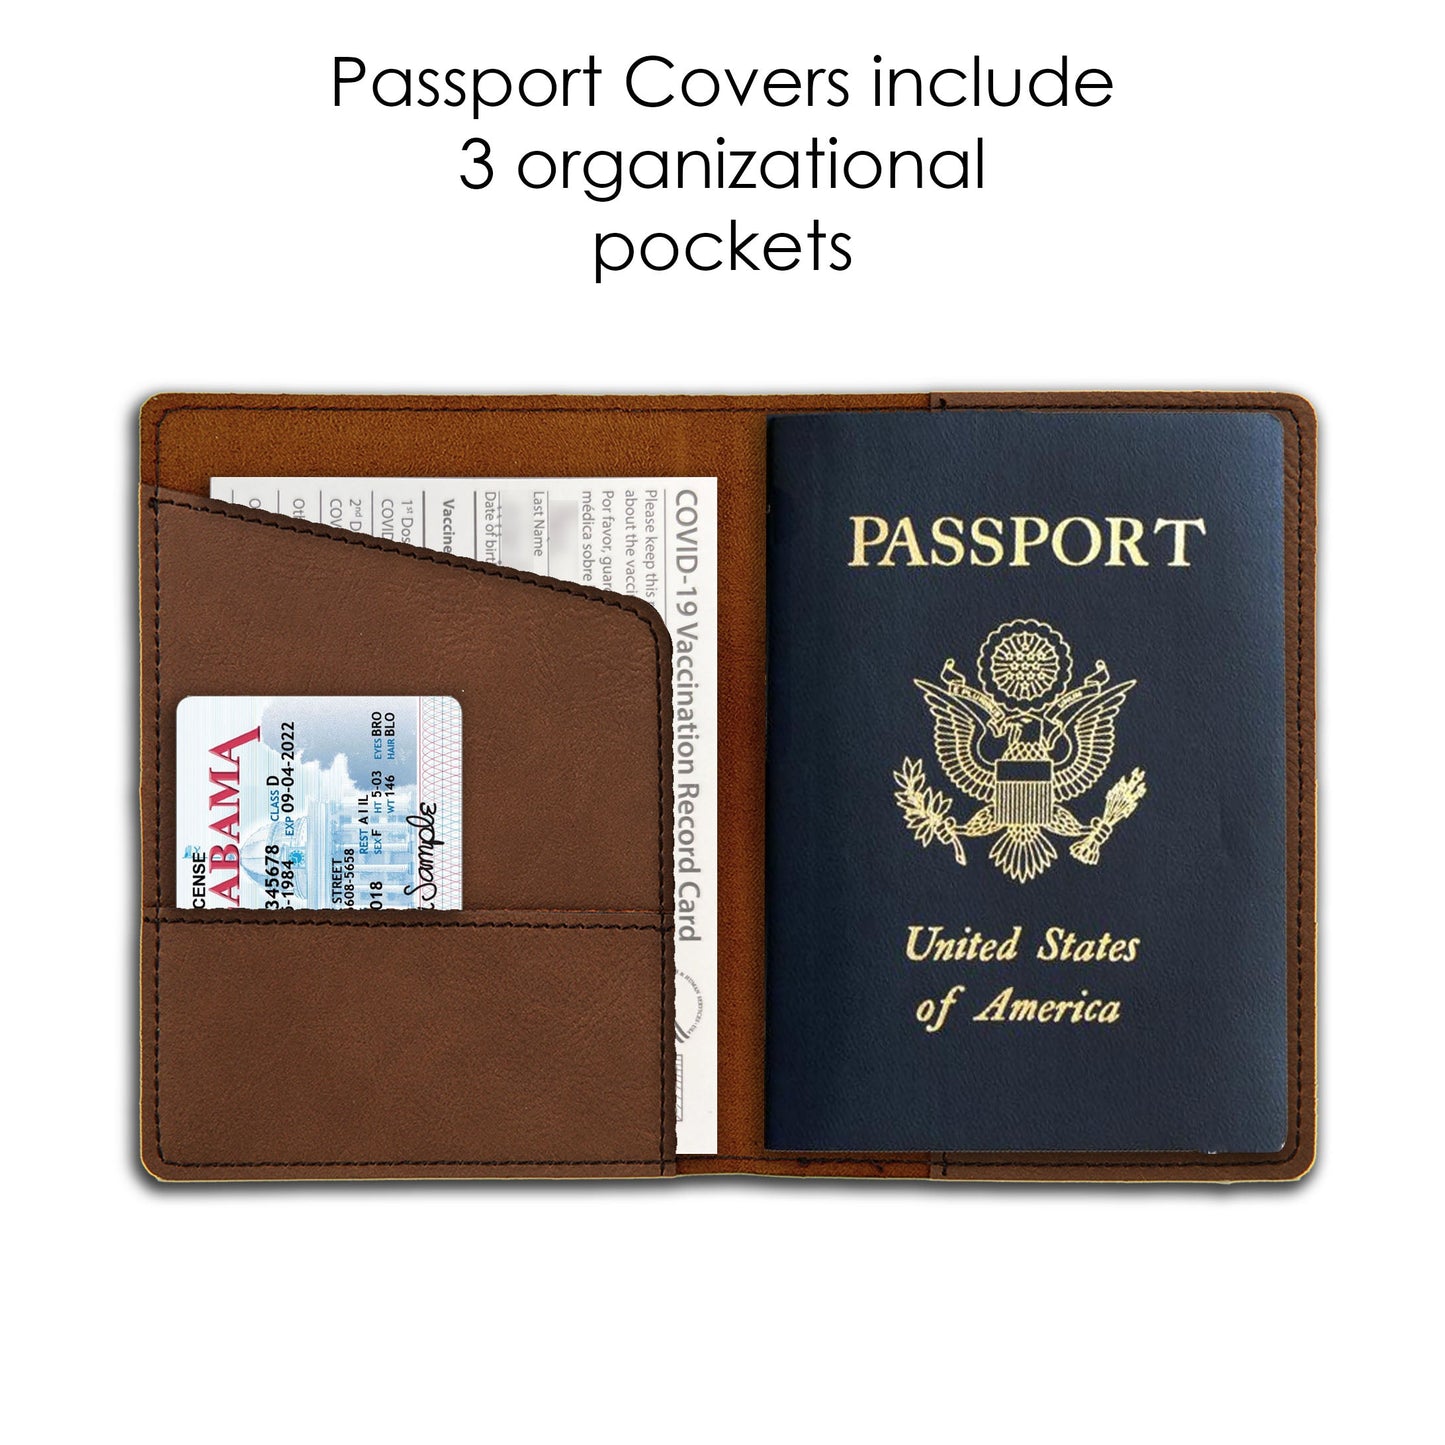 Passport Cover & Luggage Tag Set | Jessie